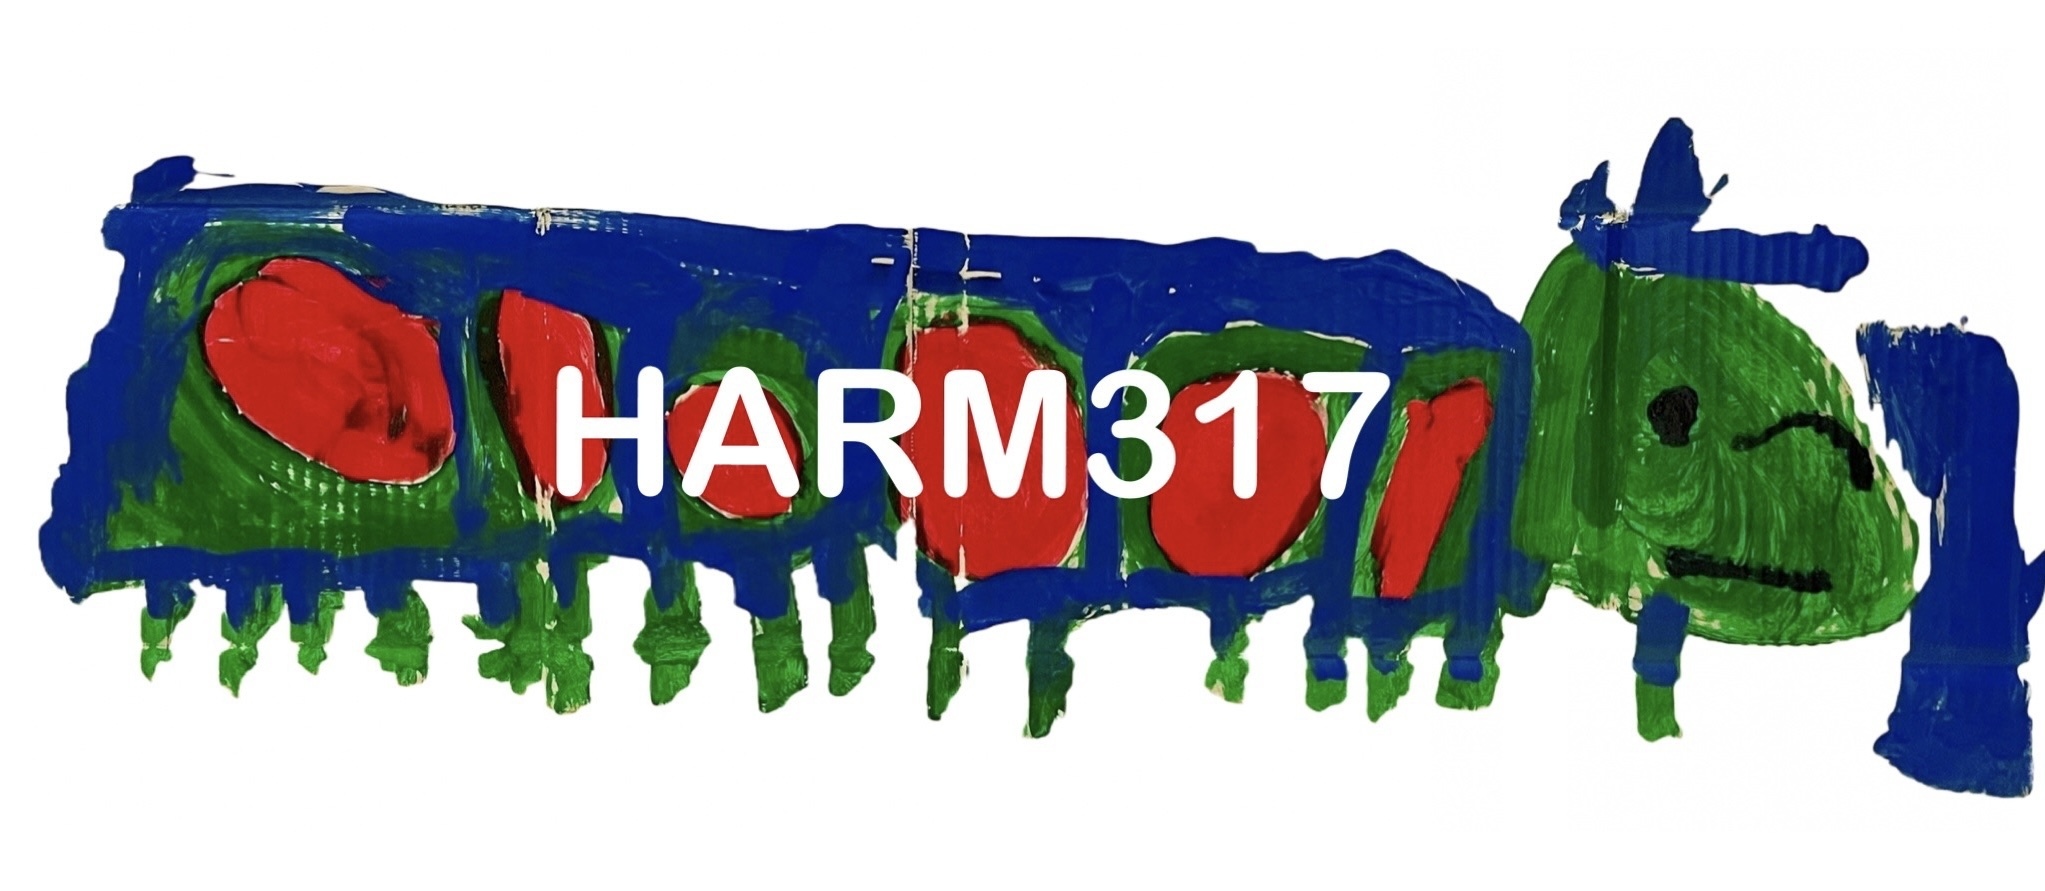 HARM317